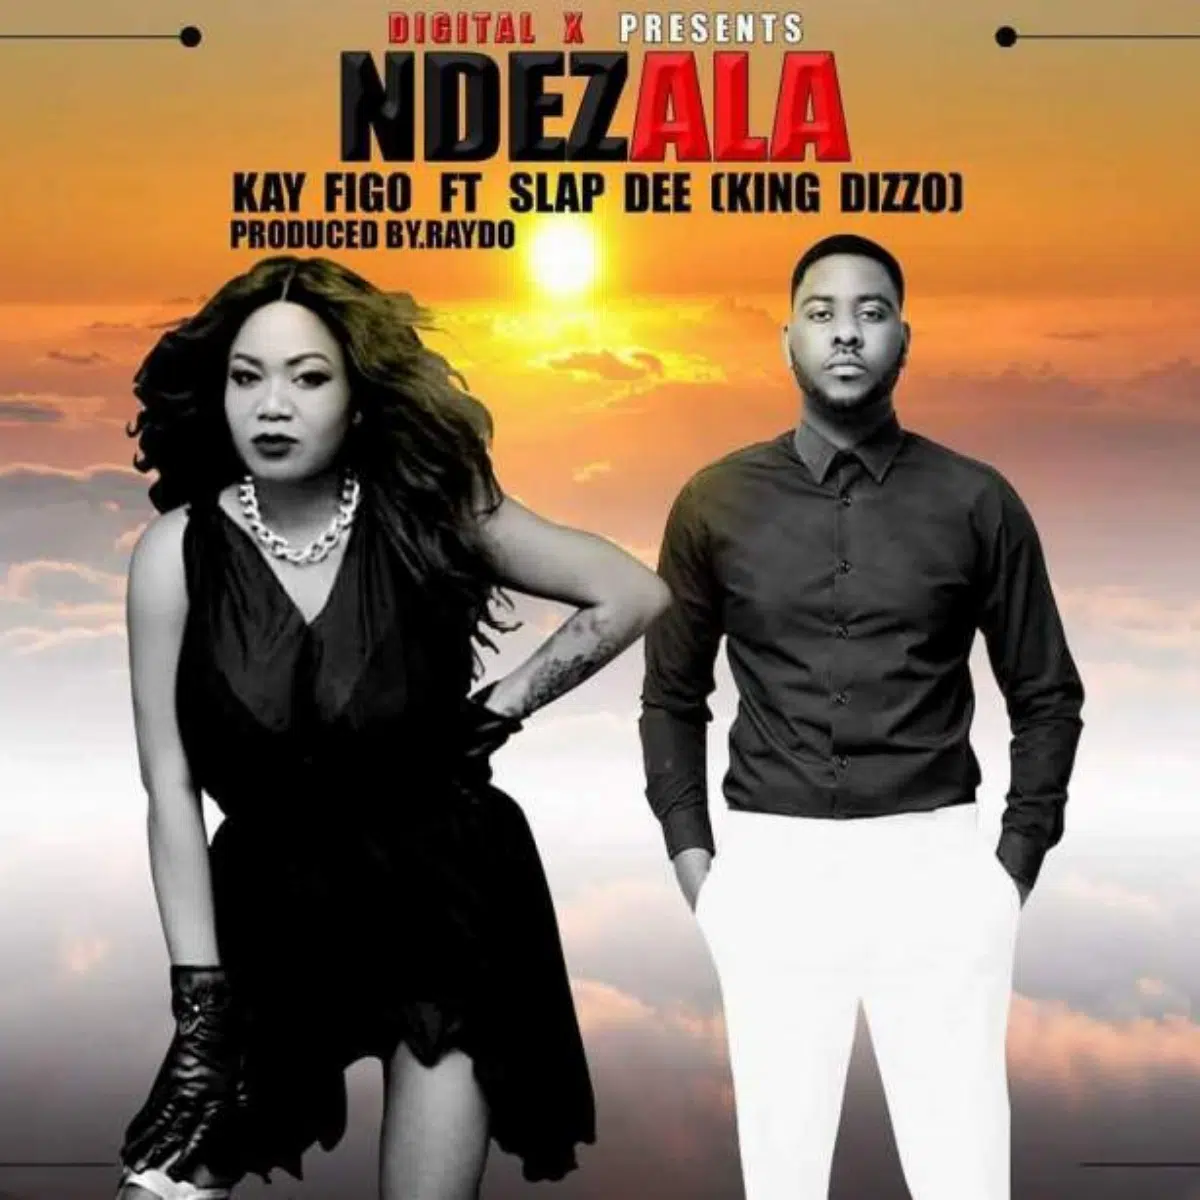 DOWNLOAD: Kay Figo Ft Slap Dee – “Ndezala” Mp3